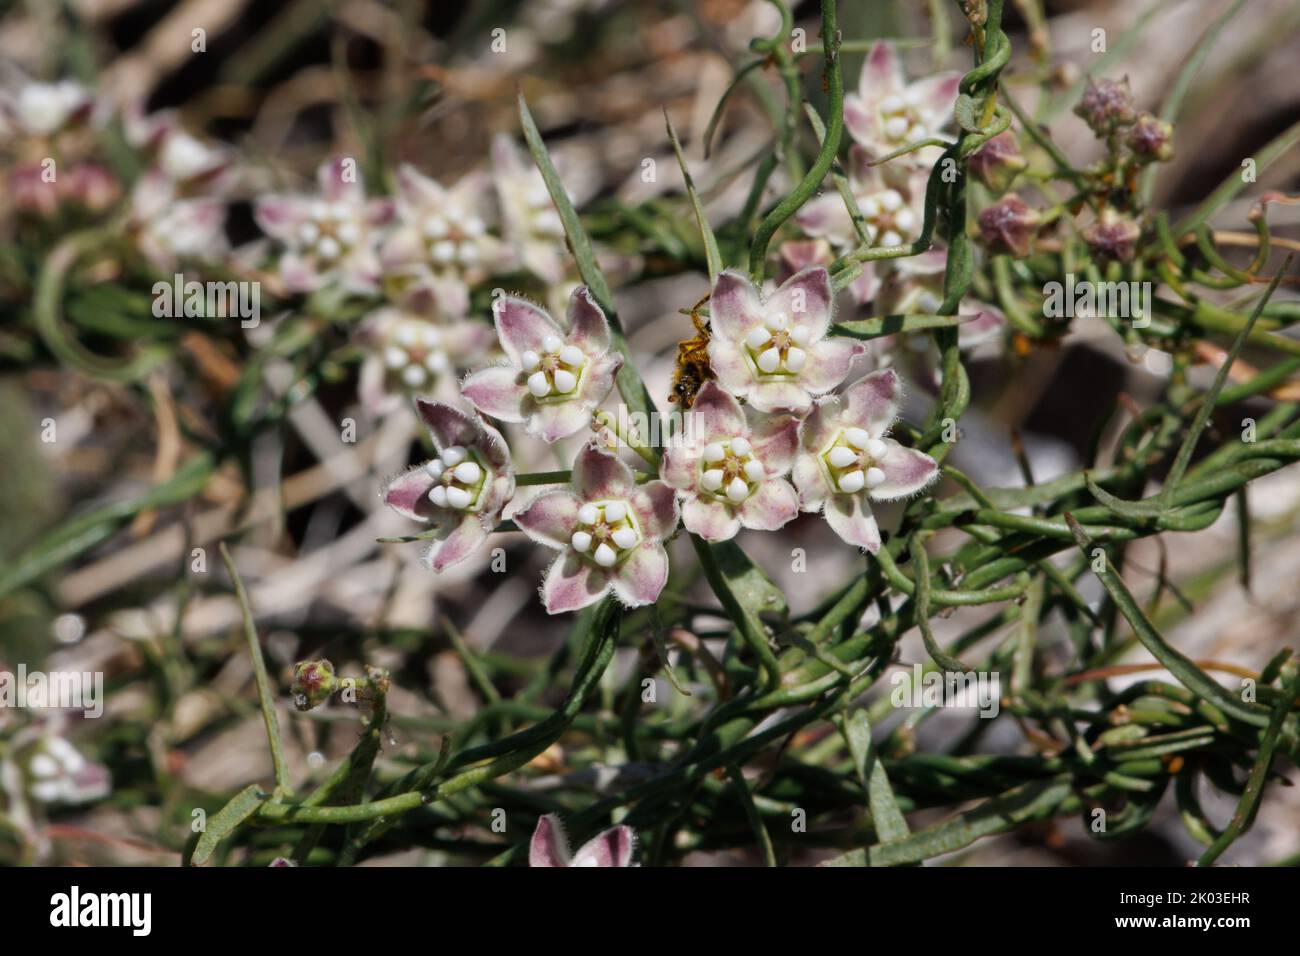 White flowering cymose umbel inflorescence of Funastrum Cynanchoides, Apocynaceae, native perennial herb in the Coachella Valley Desert, Springtime. Stock Photo